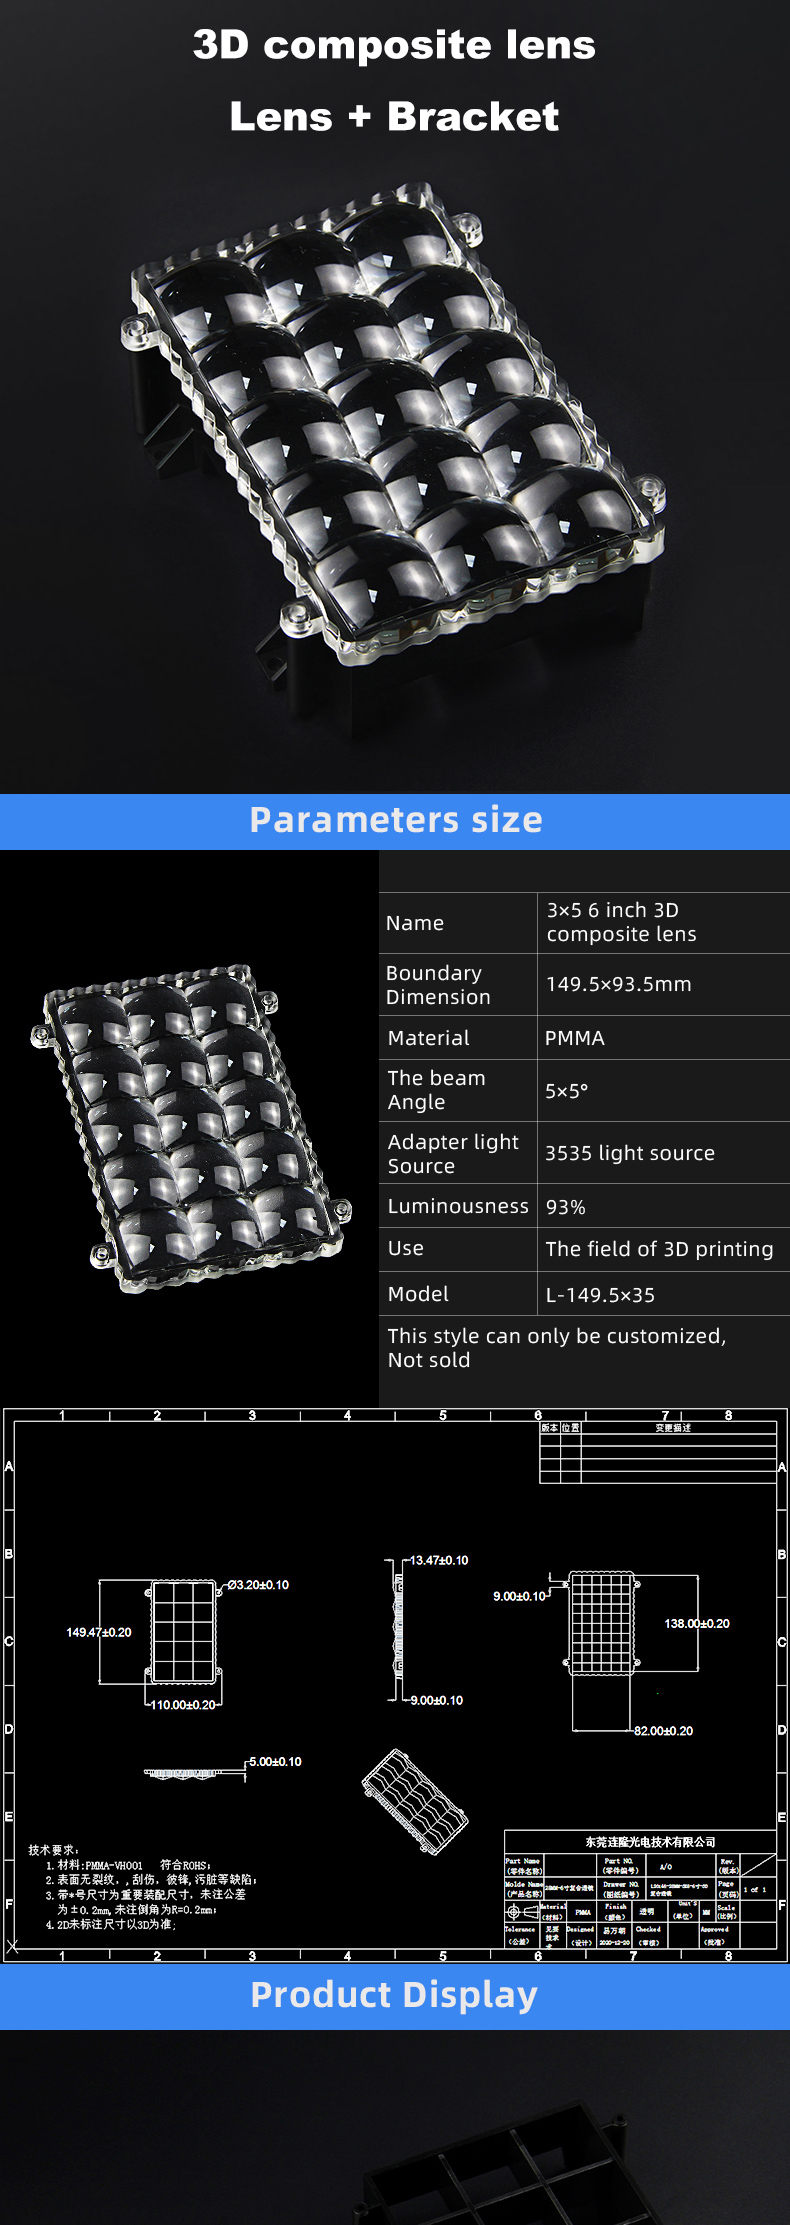 6 inch 3D printer module lens